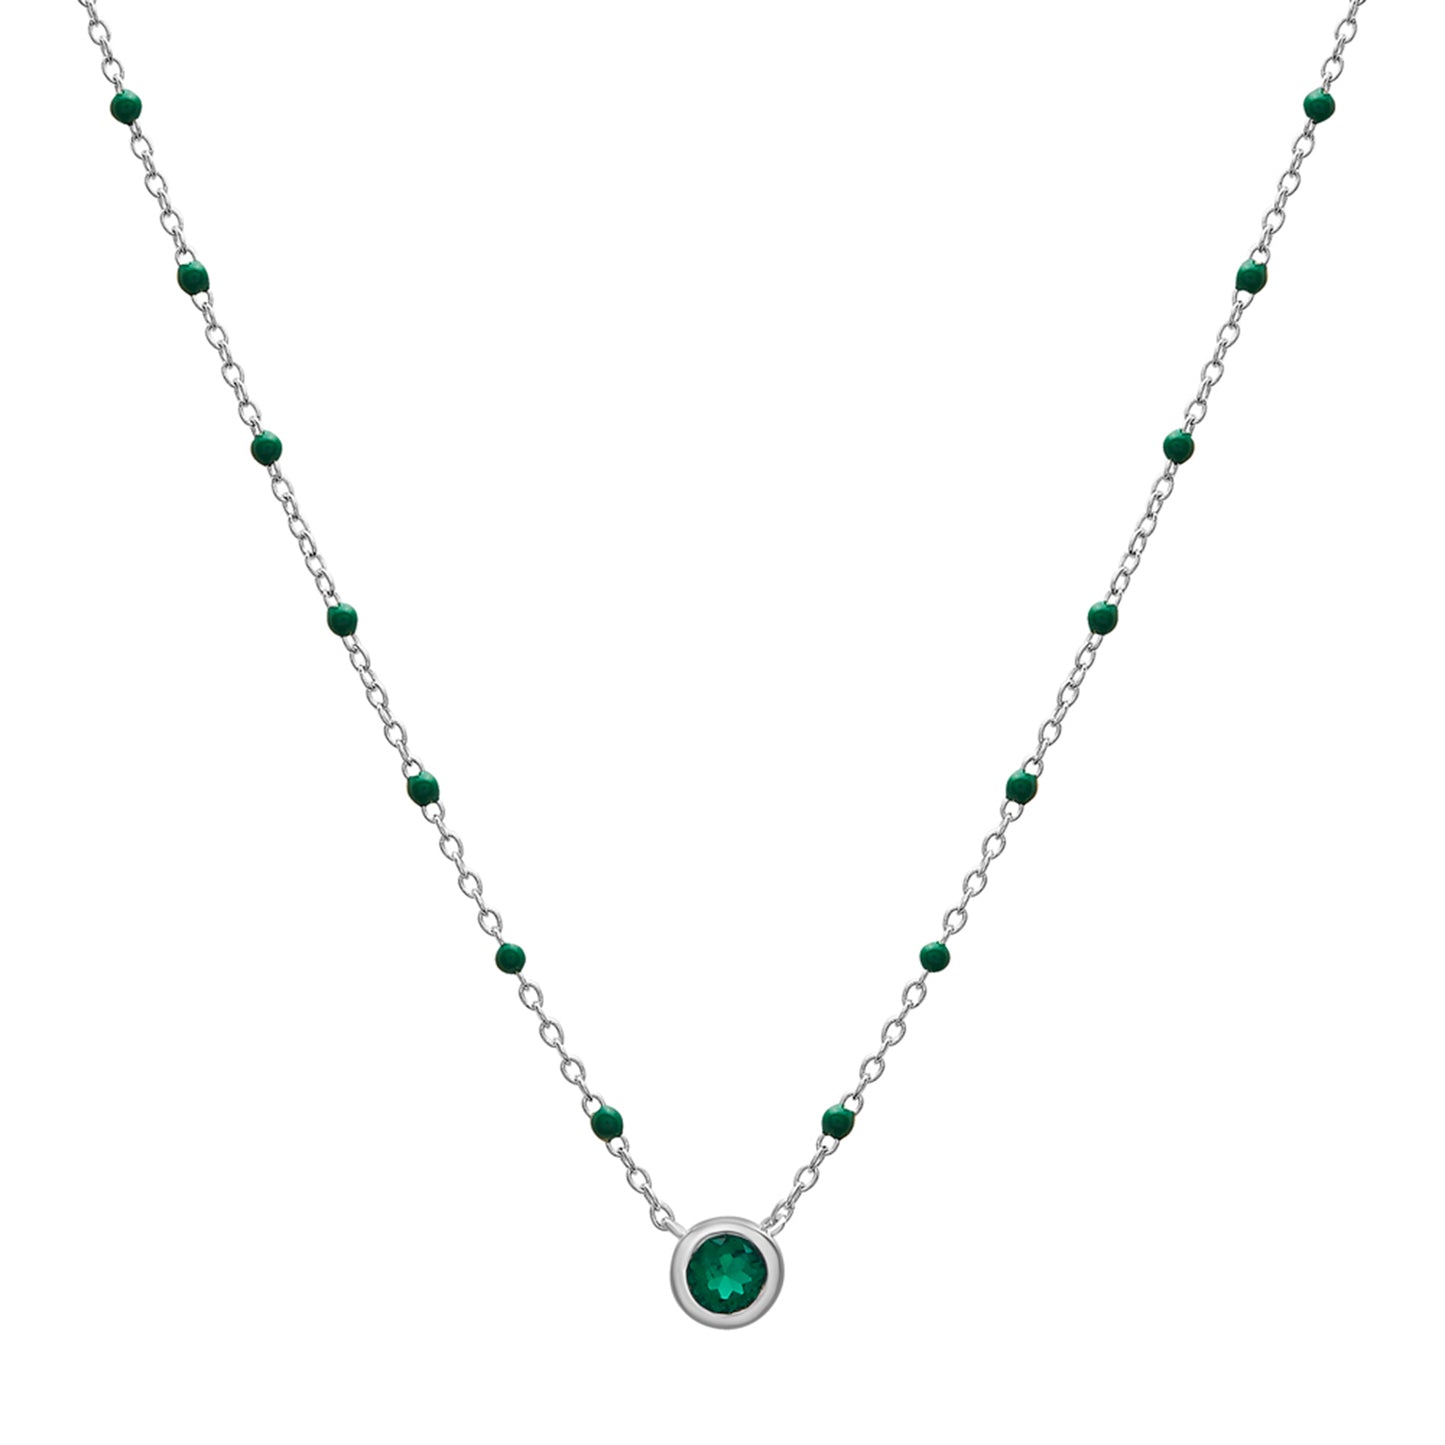 Birthstone Enamel Necklaces in Green stone